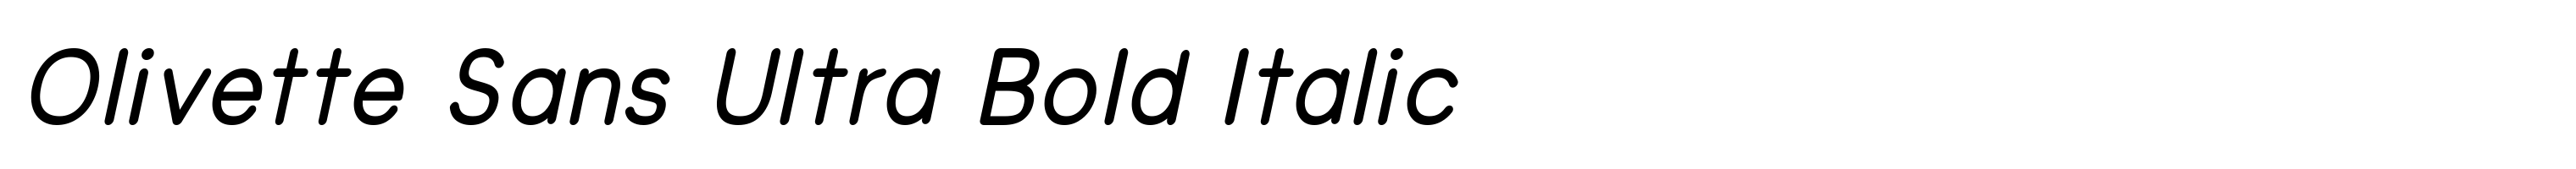 Olivette Sans Ultra Bold Italic